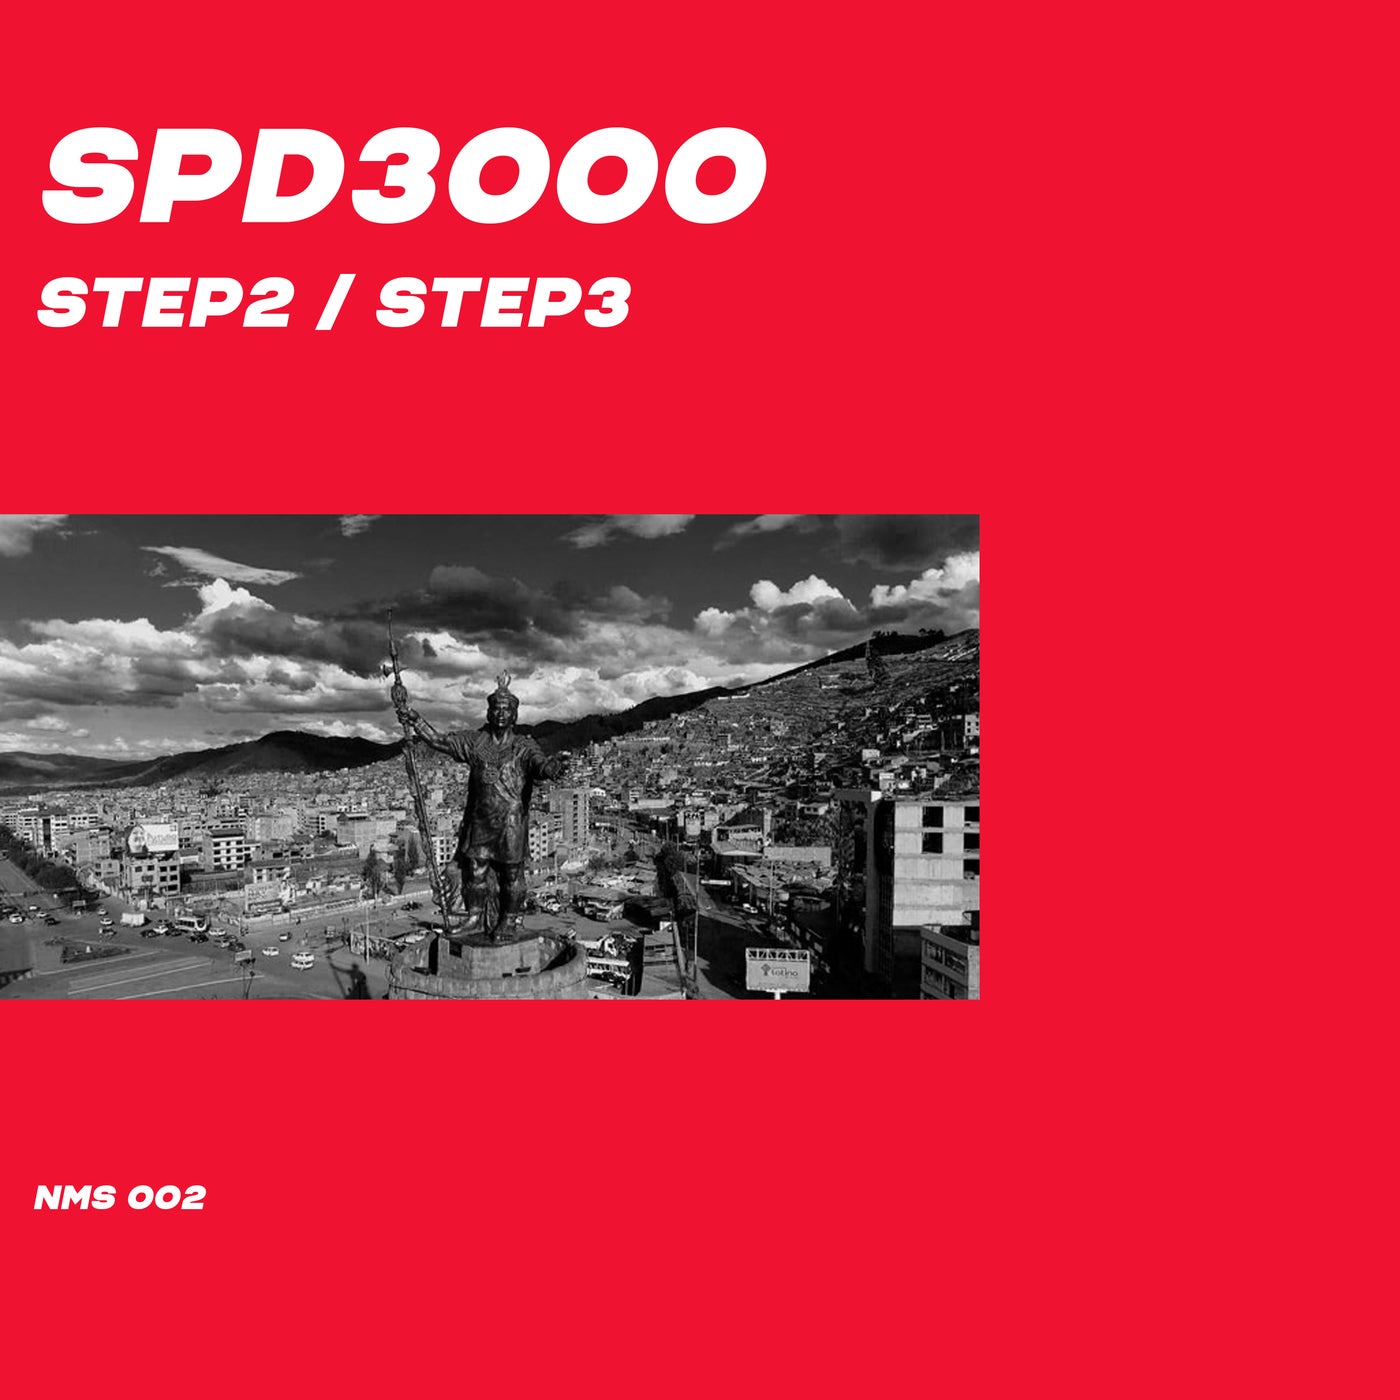 Step2 / Step 3